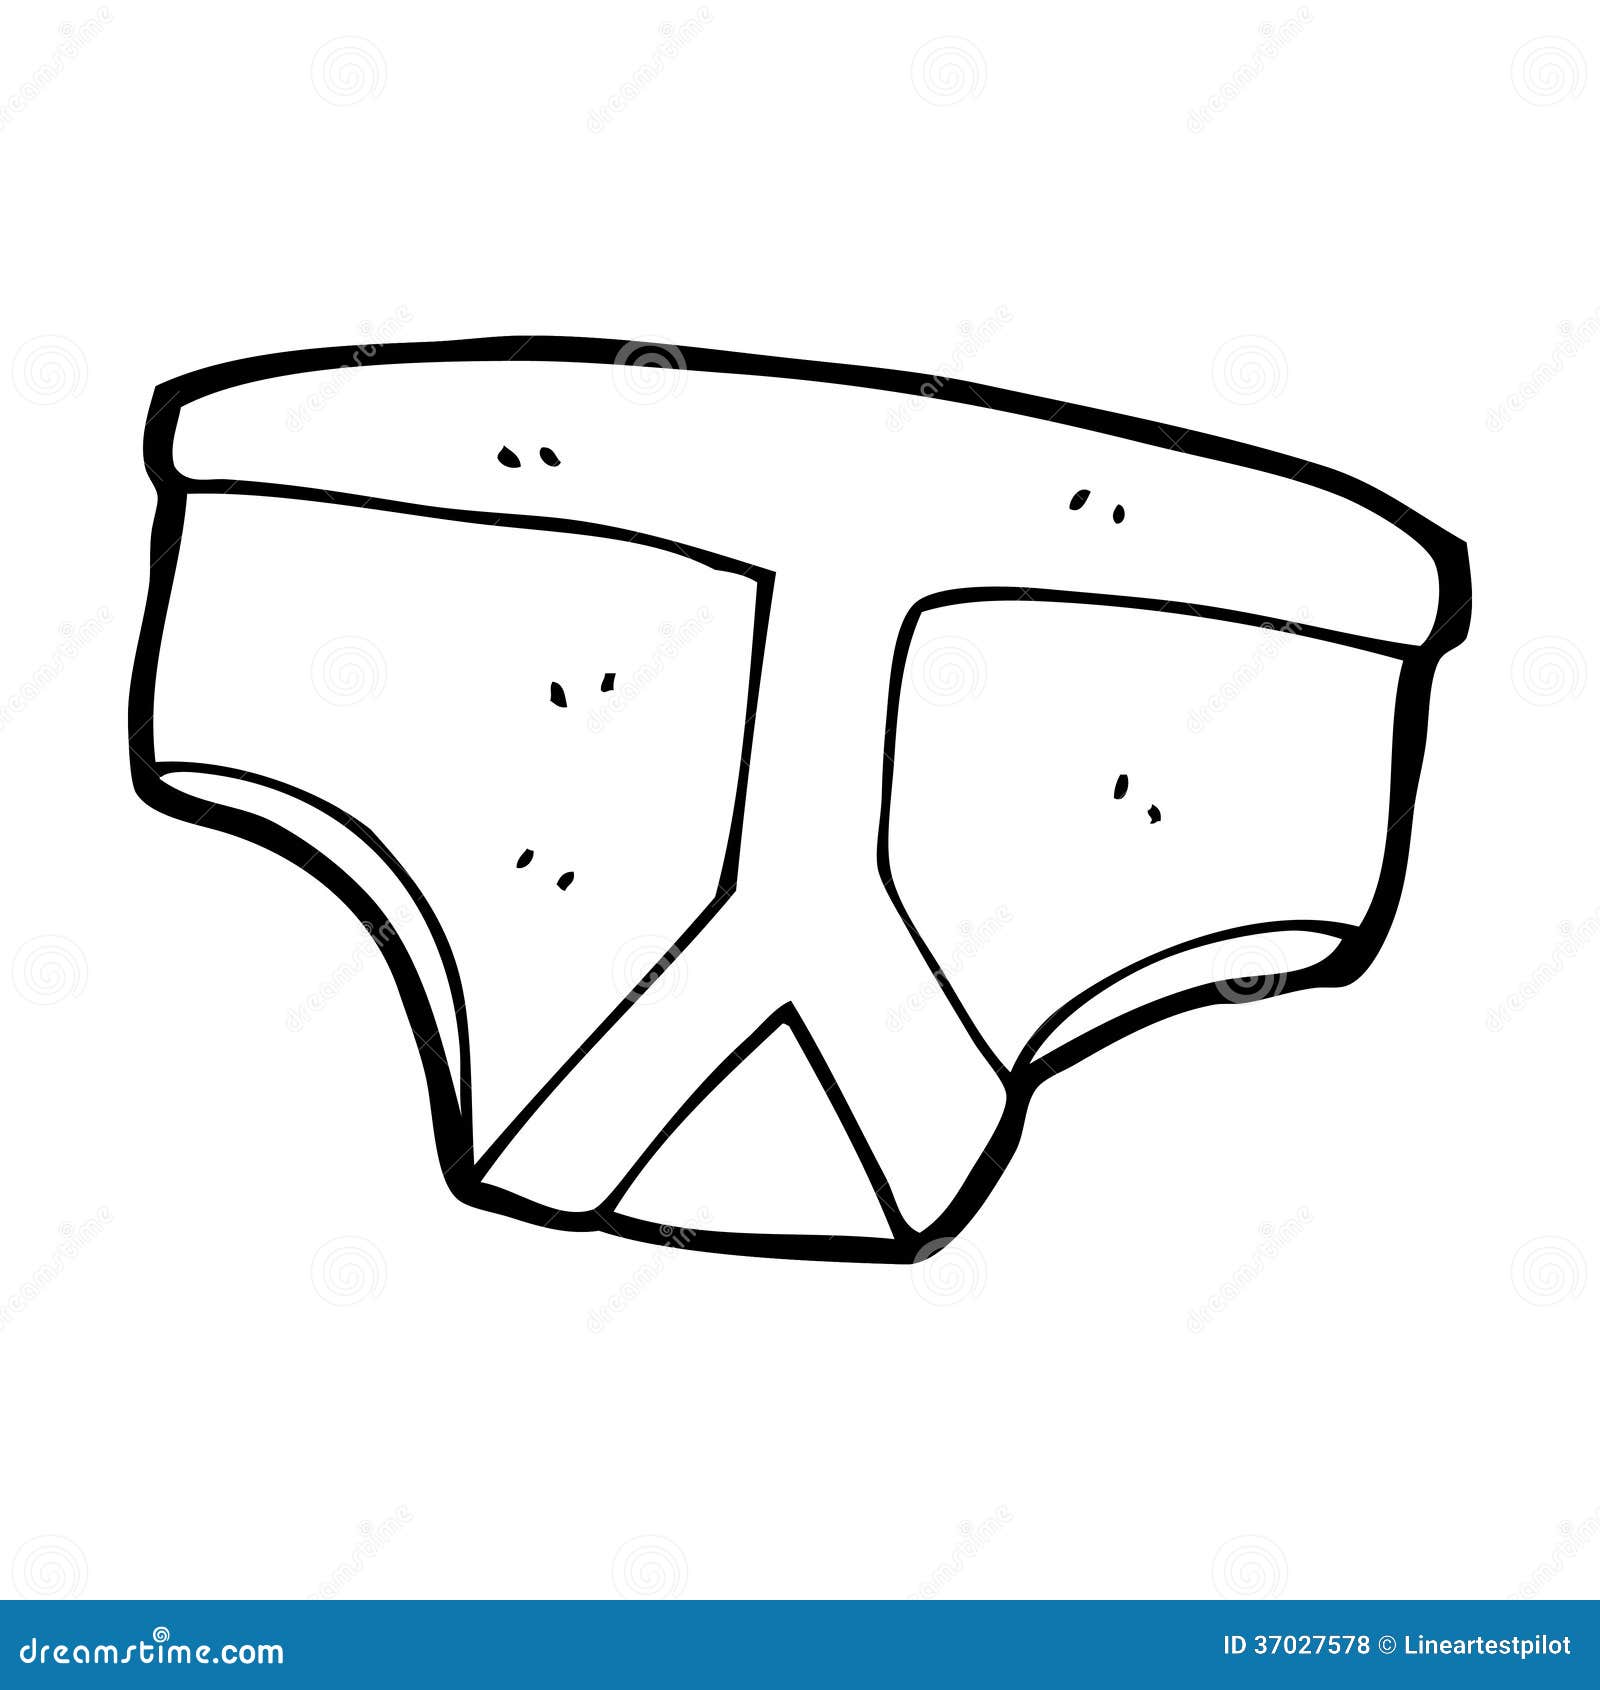 underwear clipart images - photo #45